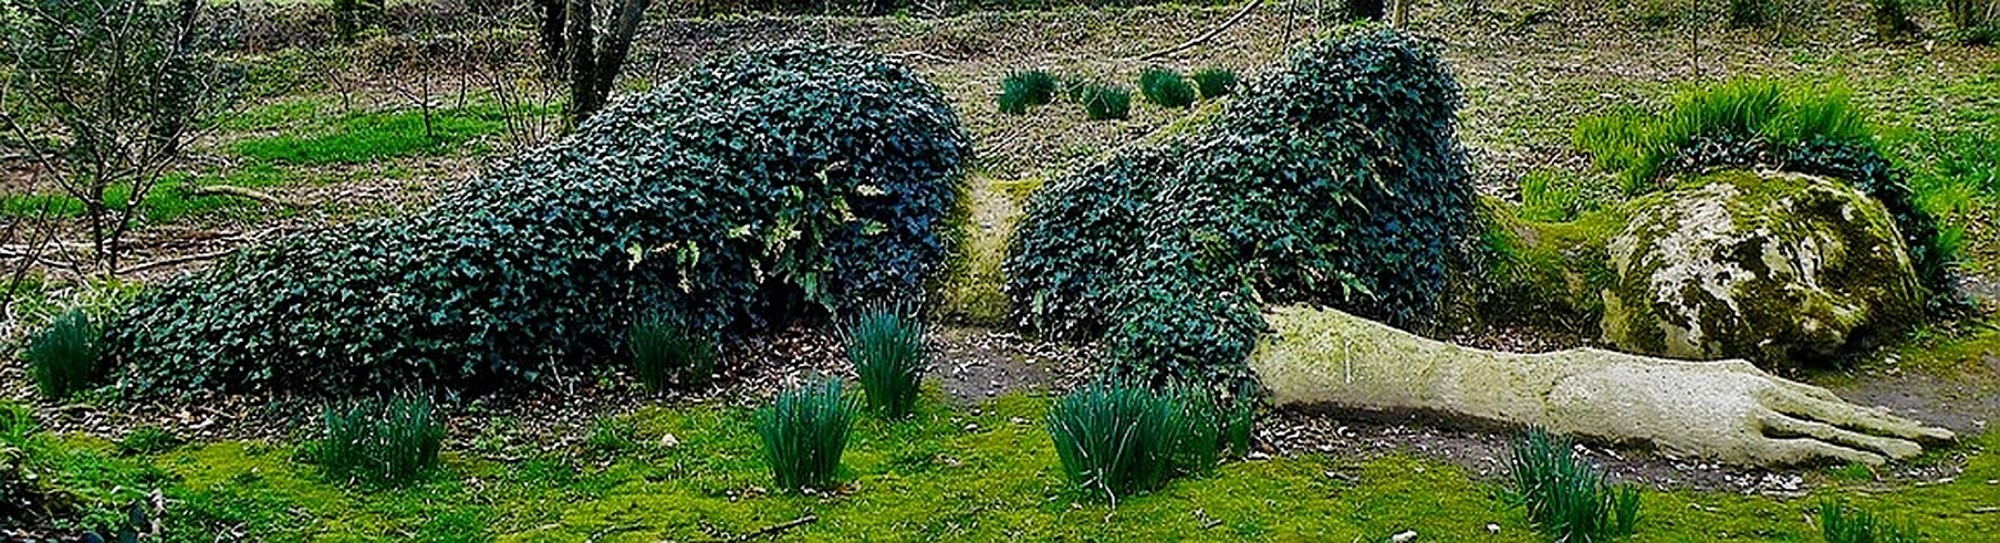 Lost Gardens of Heligan sleeping giant